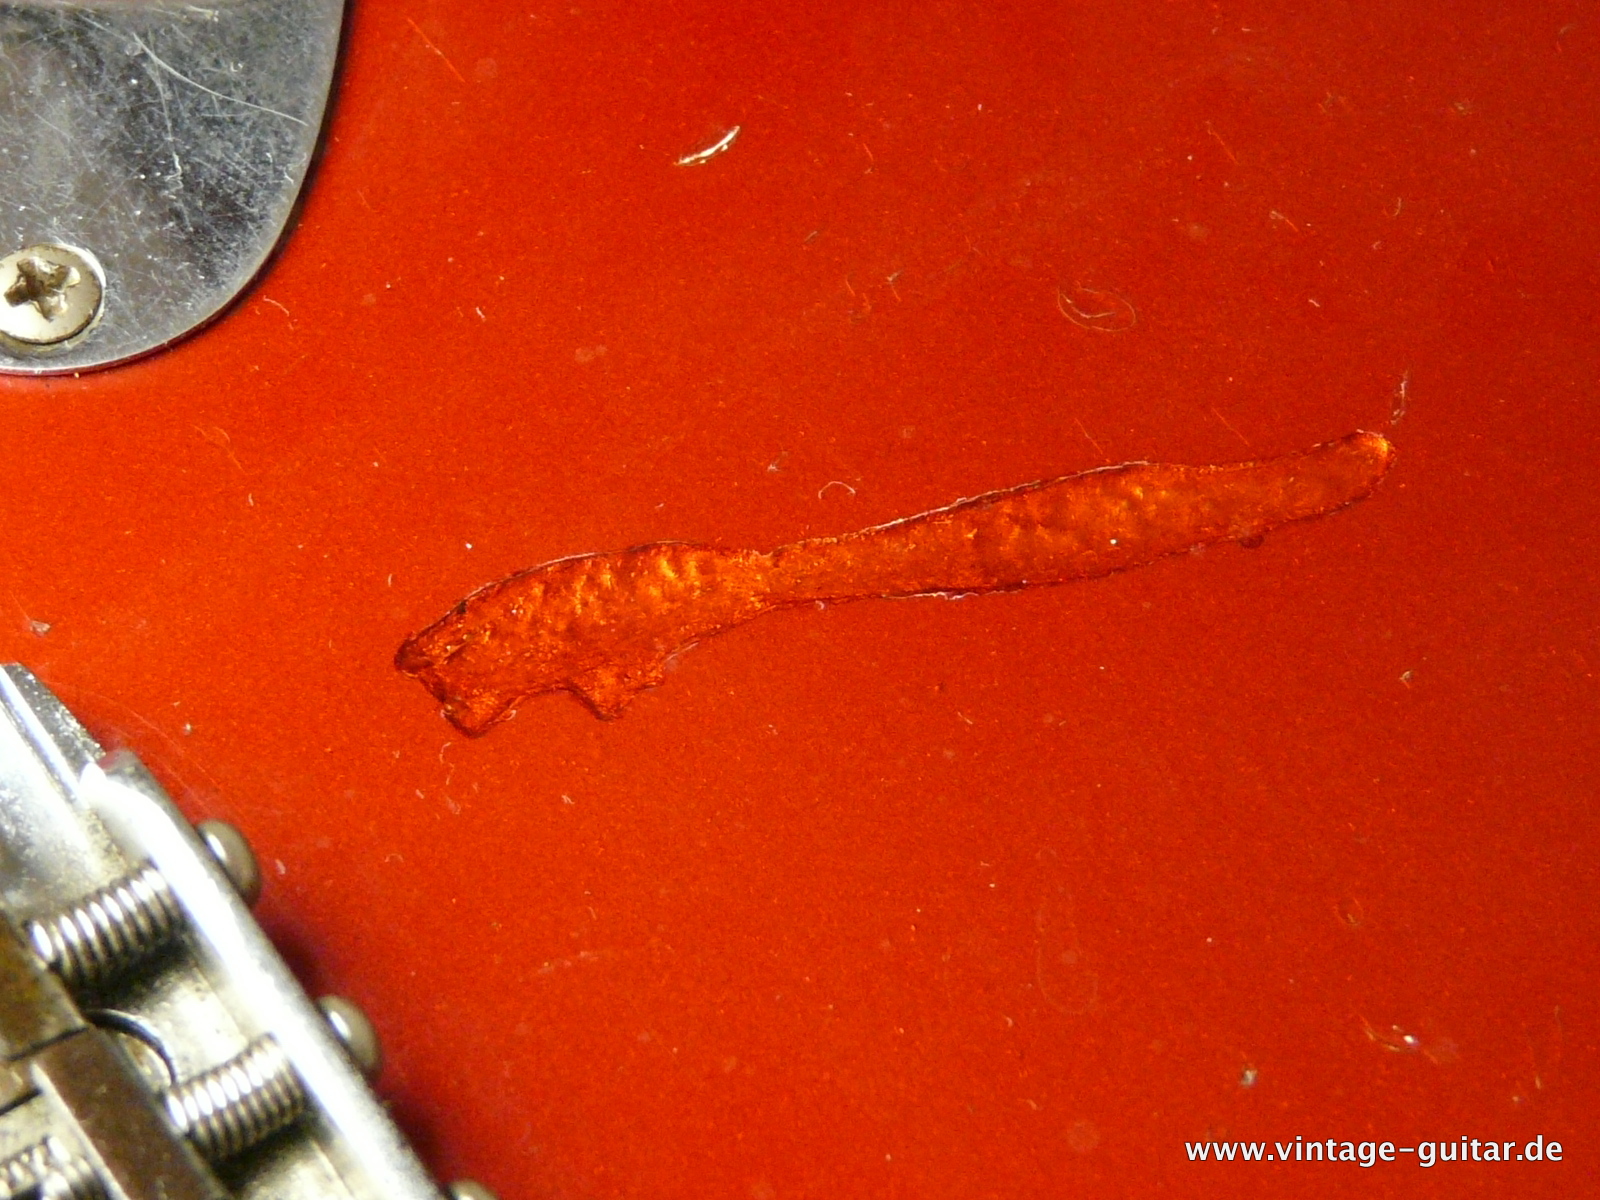 Fender_Stratocaster_candy-apple-red-1964-013.JPG